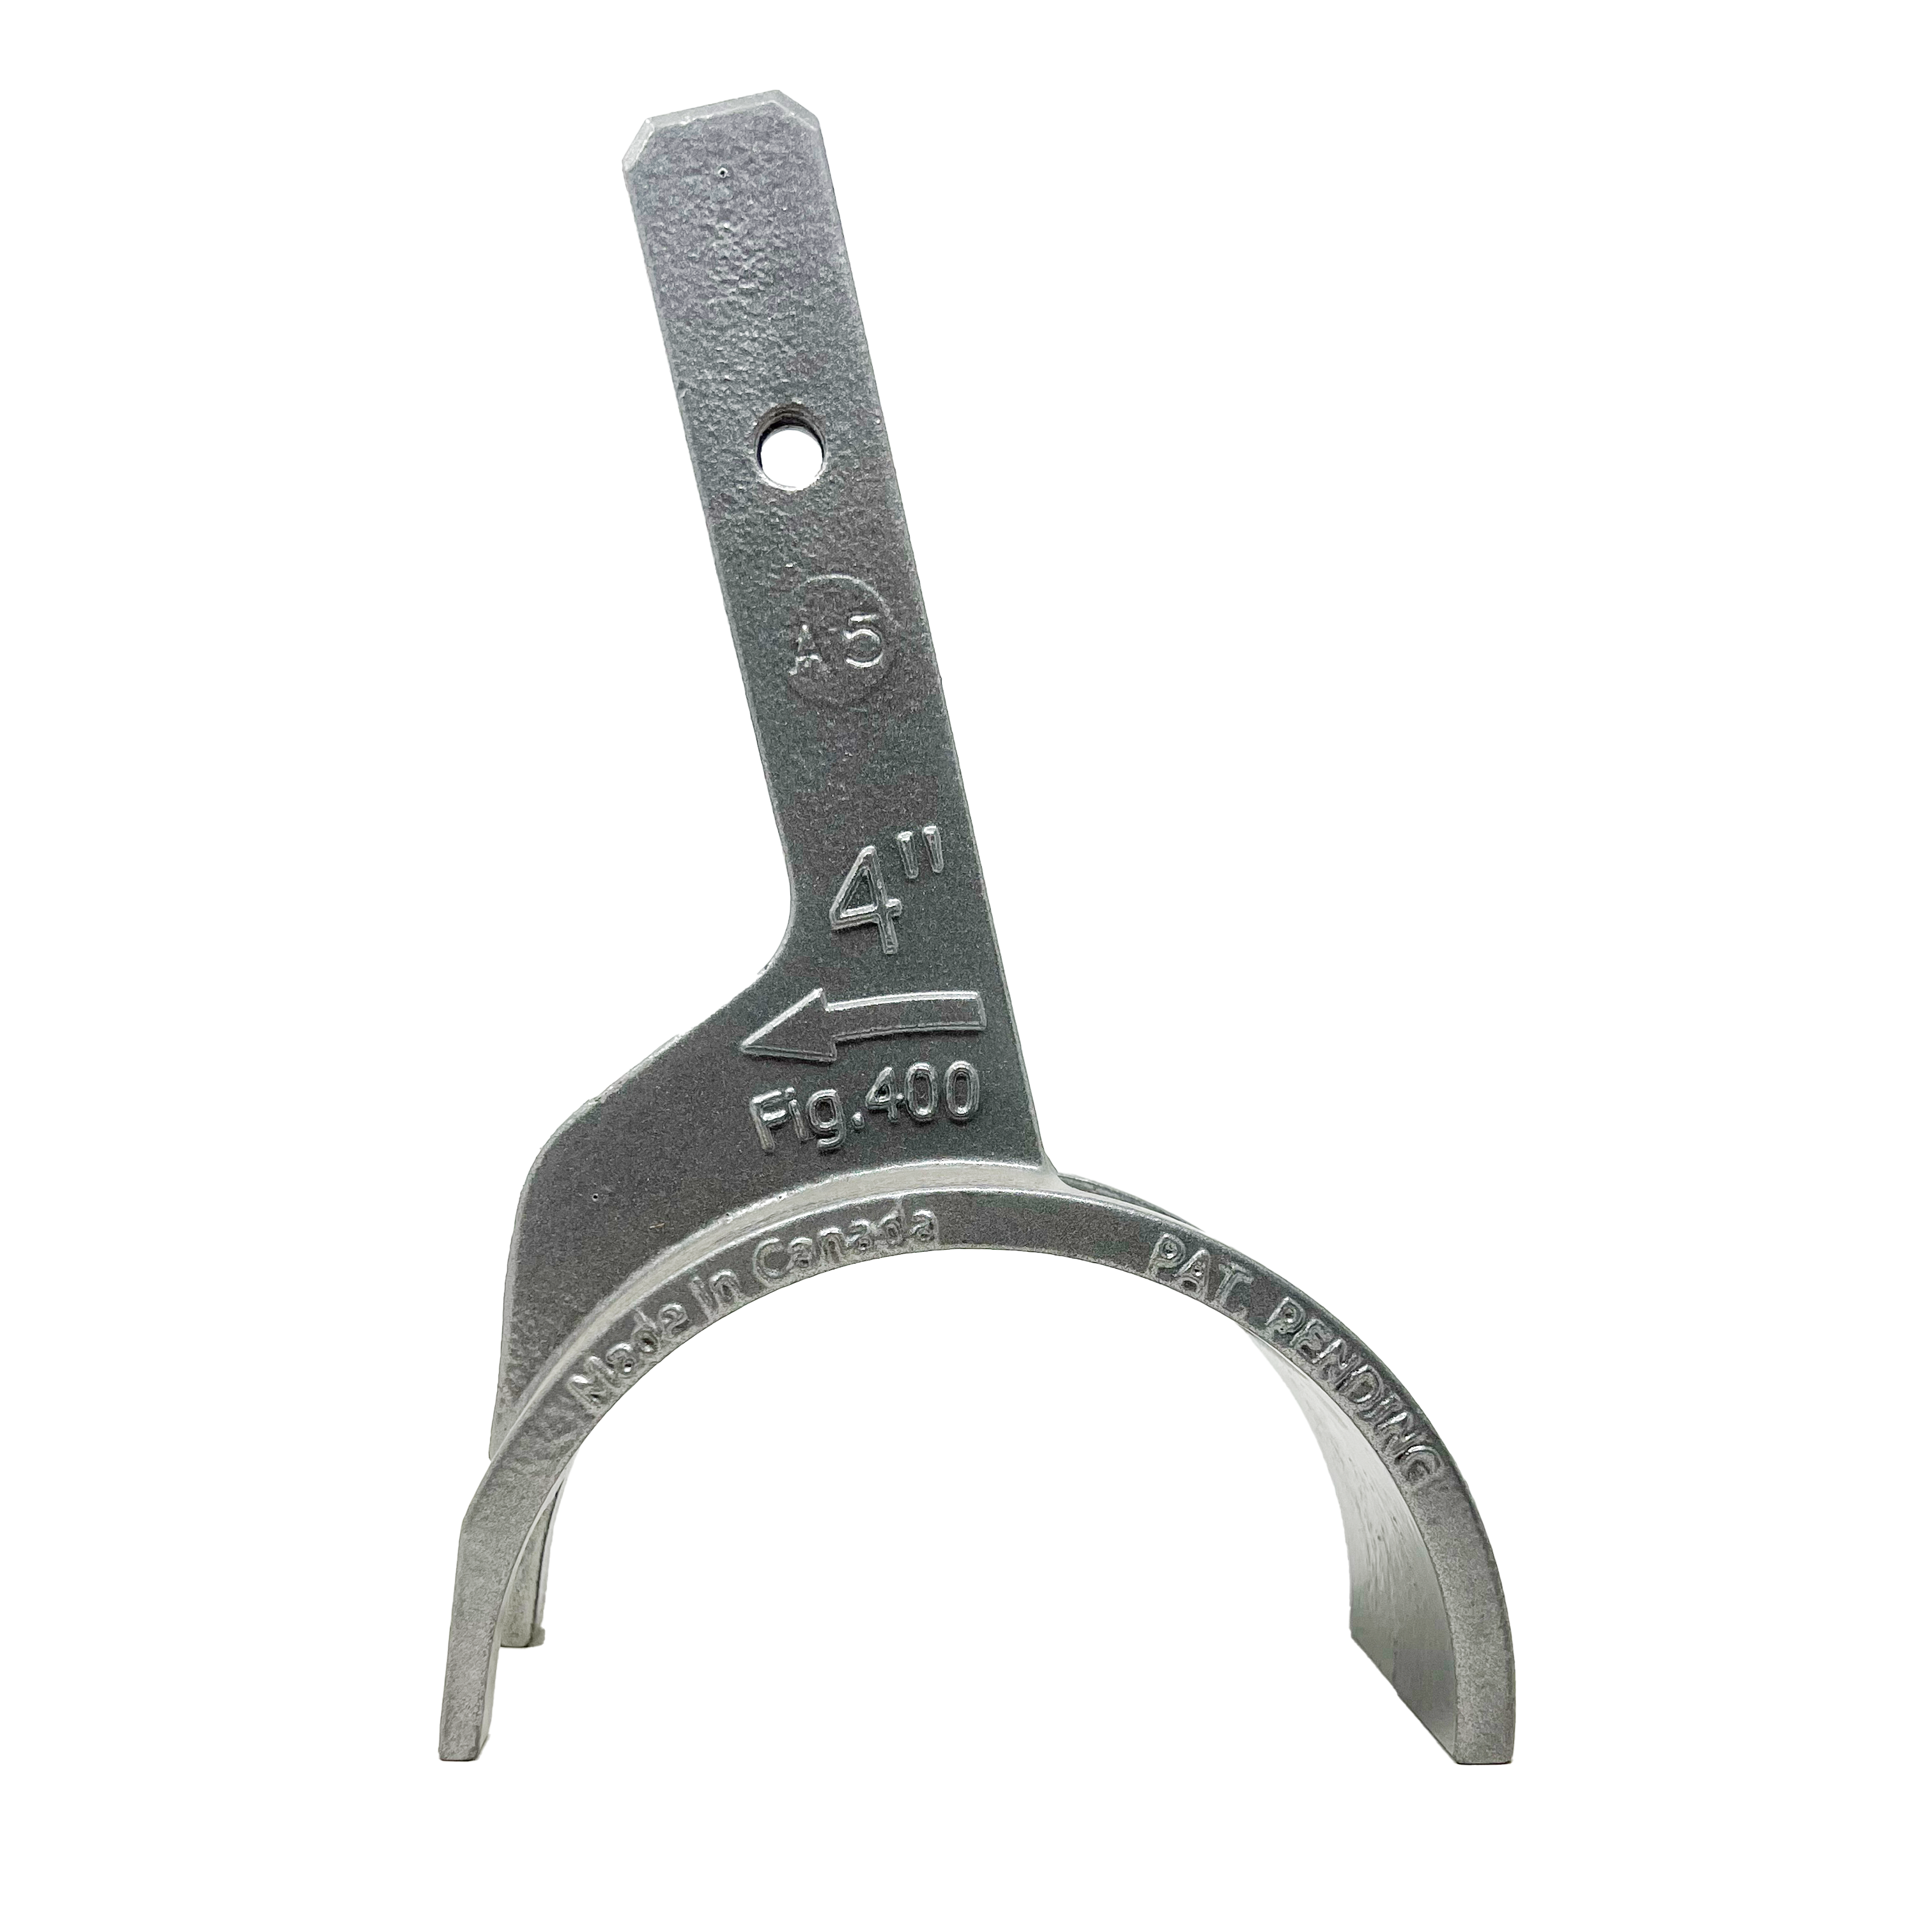 710-0049 HUWE Wrench Head for 4" Figure 100, Figure 200, Figure 206, Figure 400